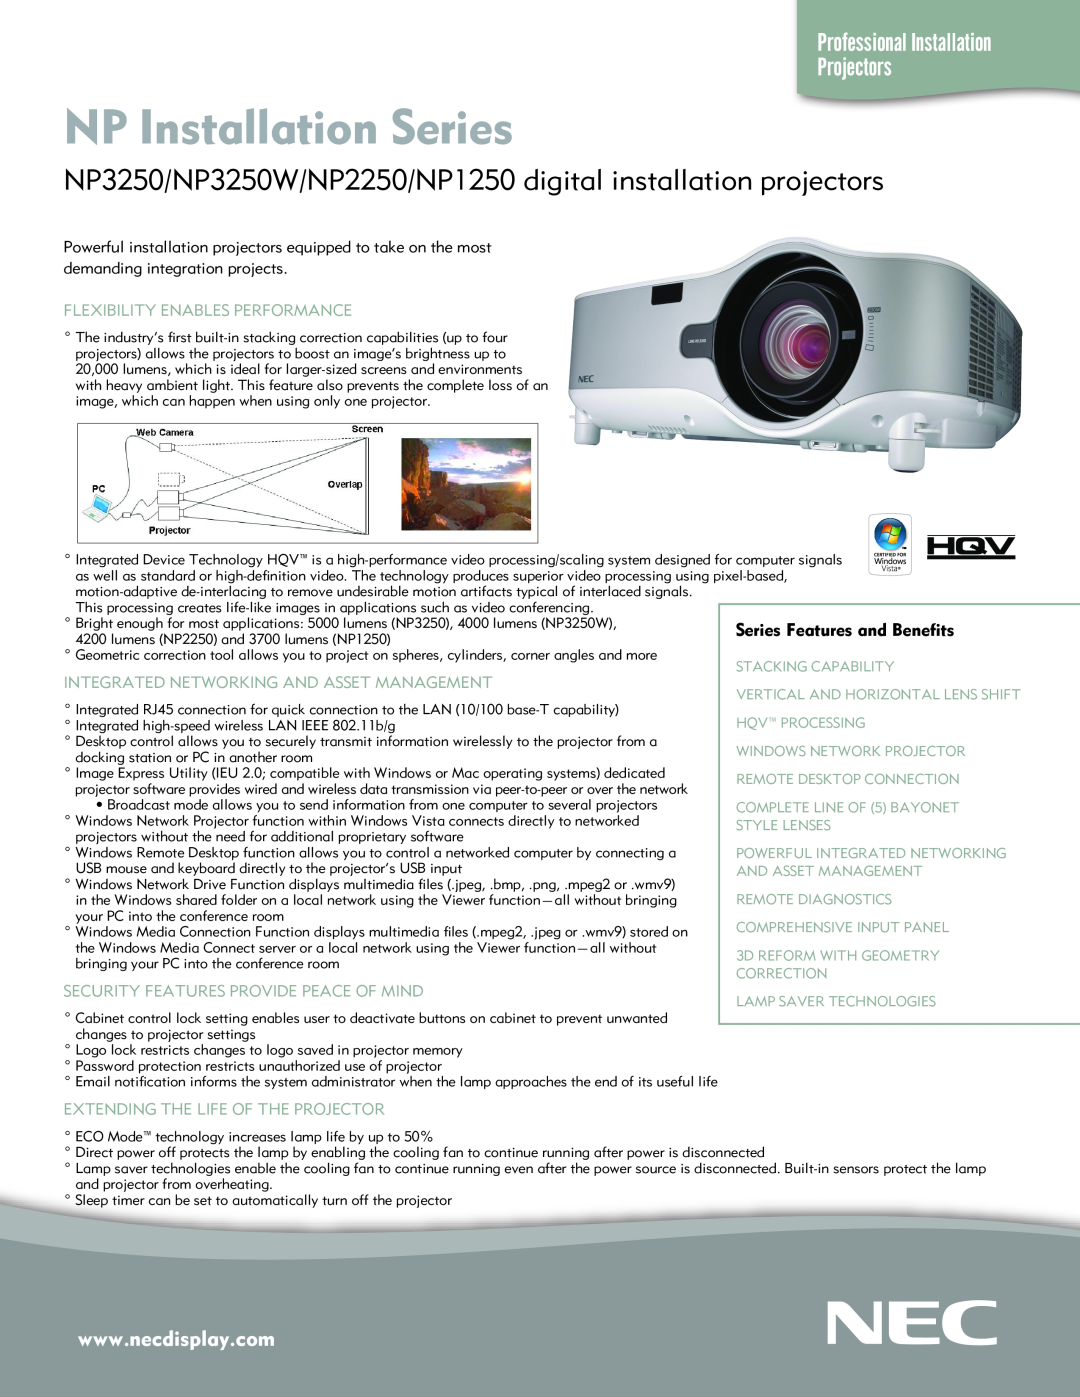 NEC manual NP Installation Series, NP3250/NP3250W/NP2250/NP1250 digital installation projectors 